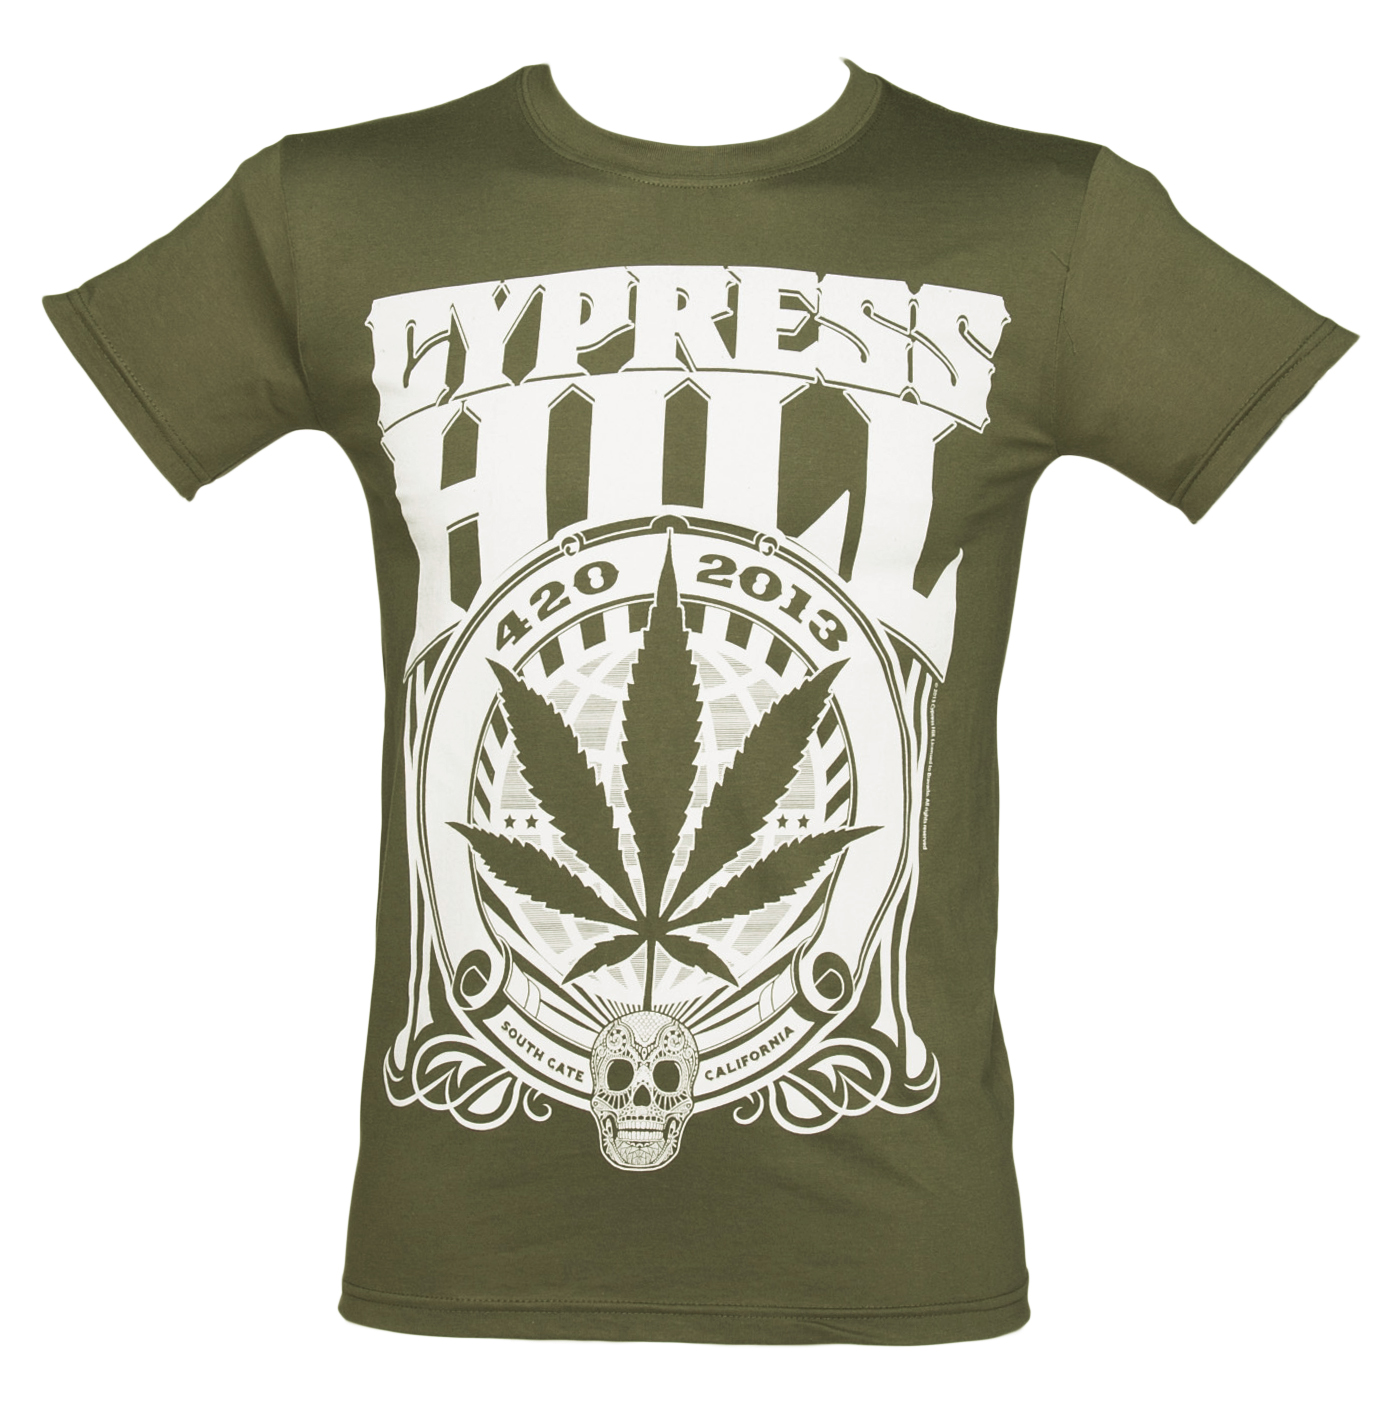 Cypress Hill 420 2013 T-Shirt